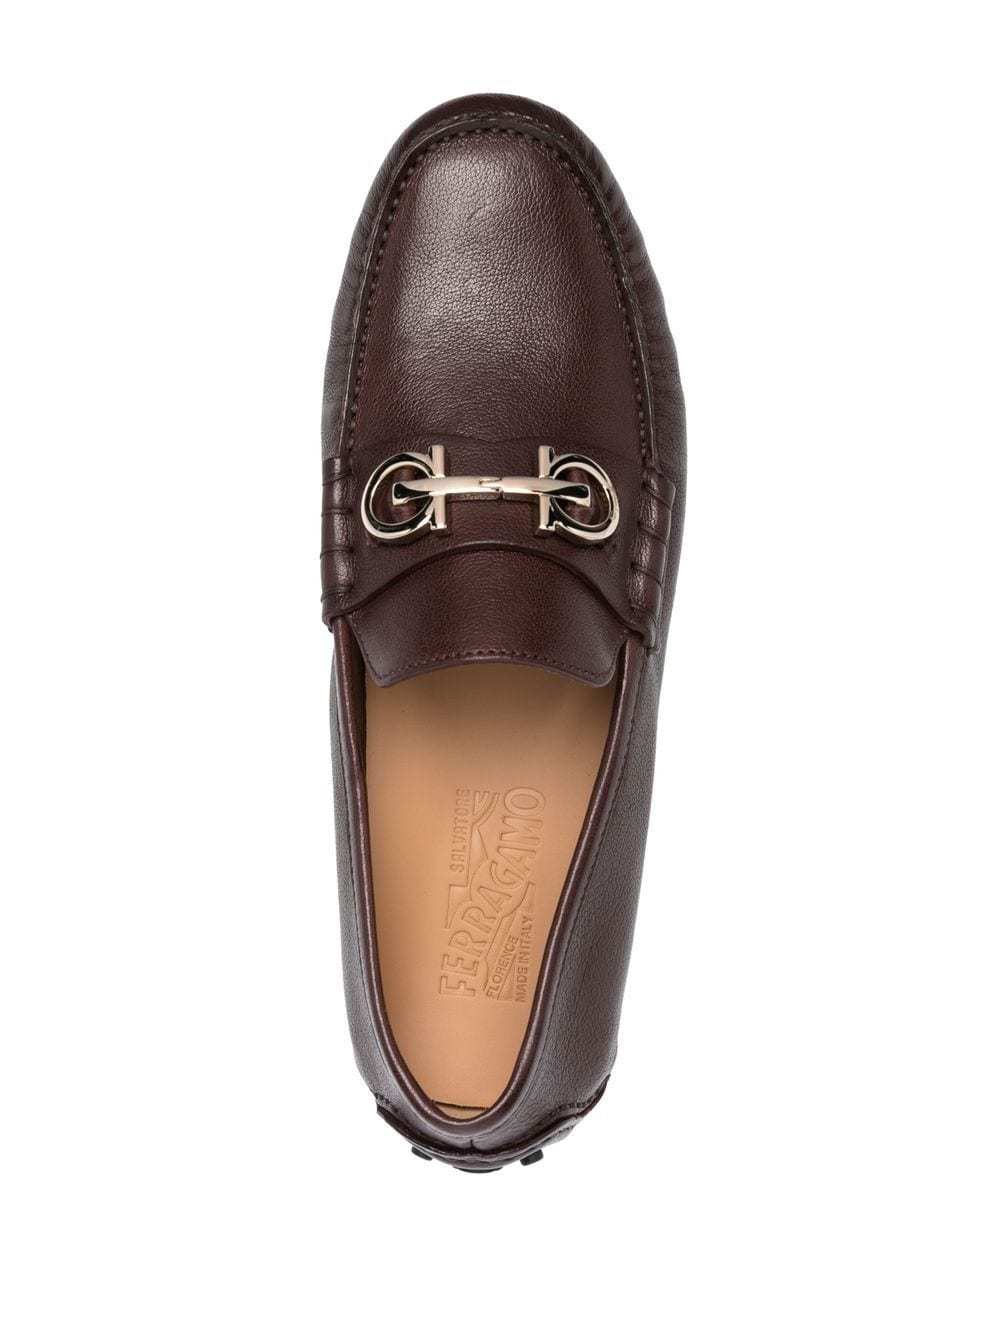 Horsebit-detail leather loafers<BR/><BR/><BR/>